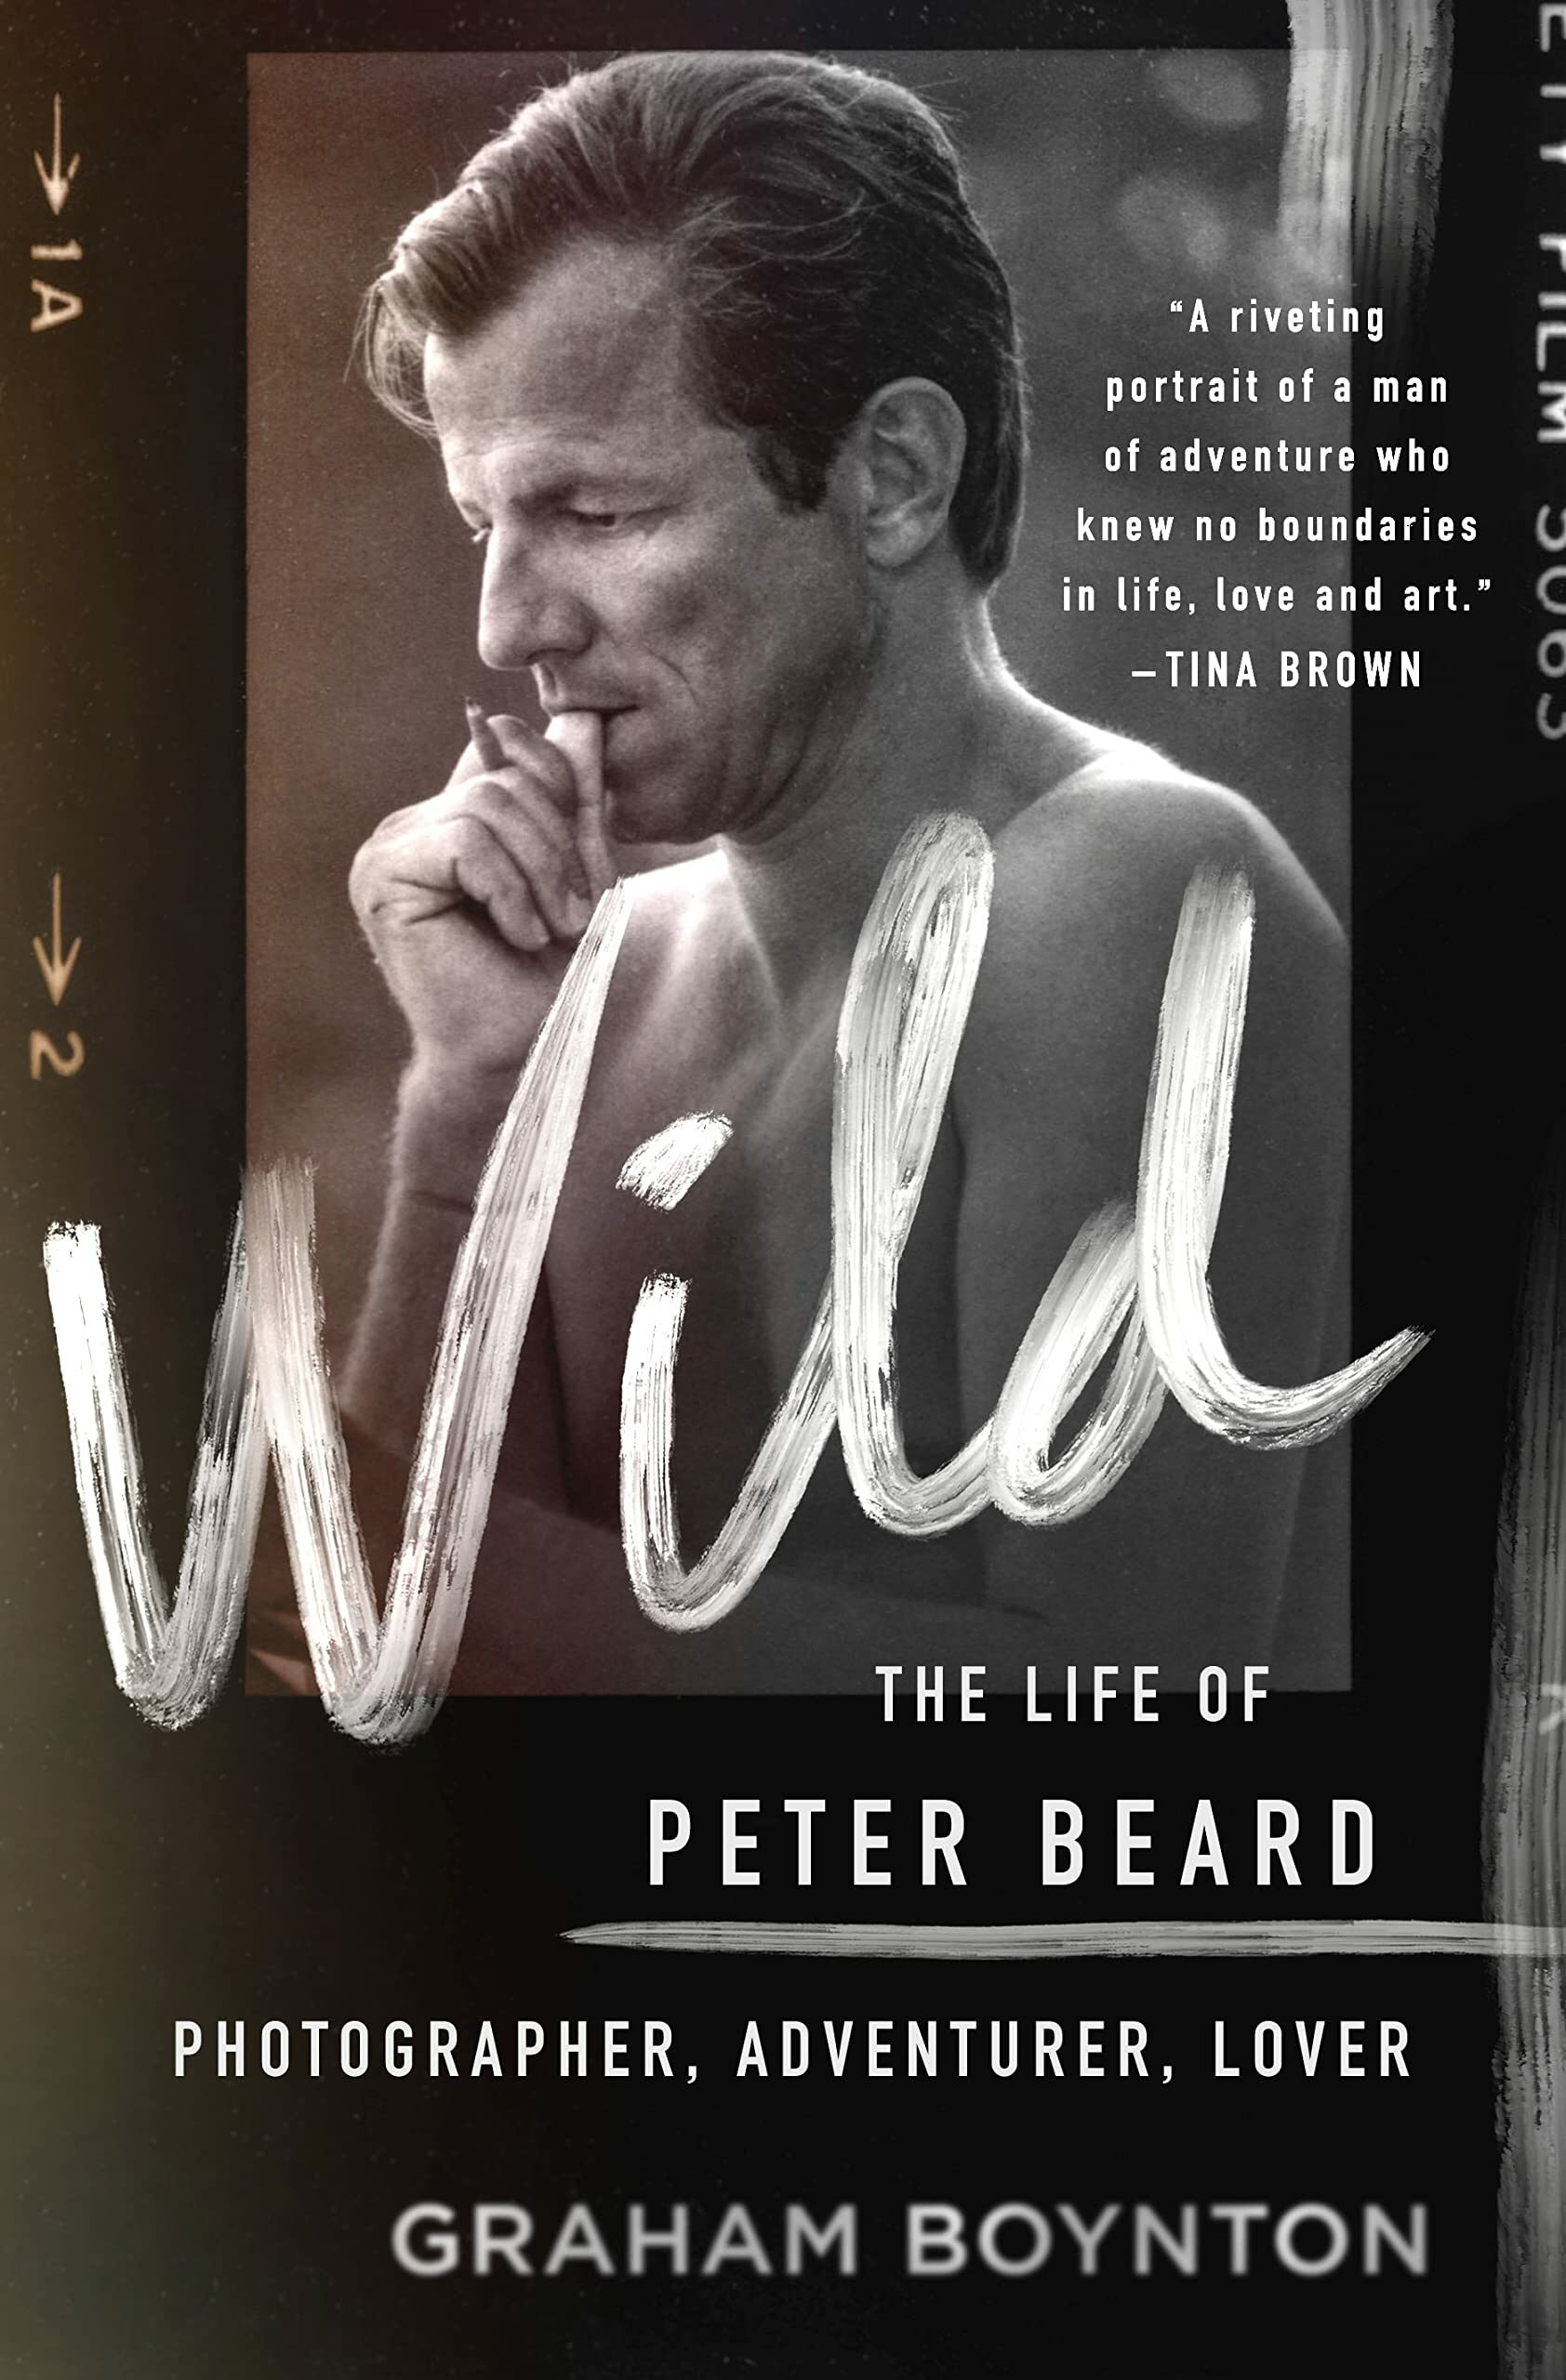 Wild: The Life of Peter Beard: Photographer, Adventurer, Lover